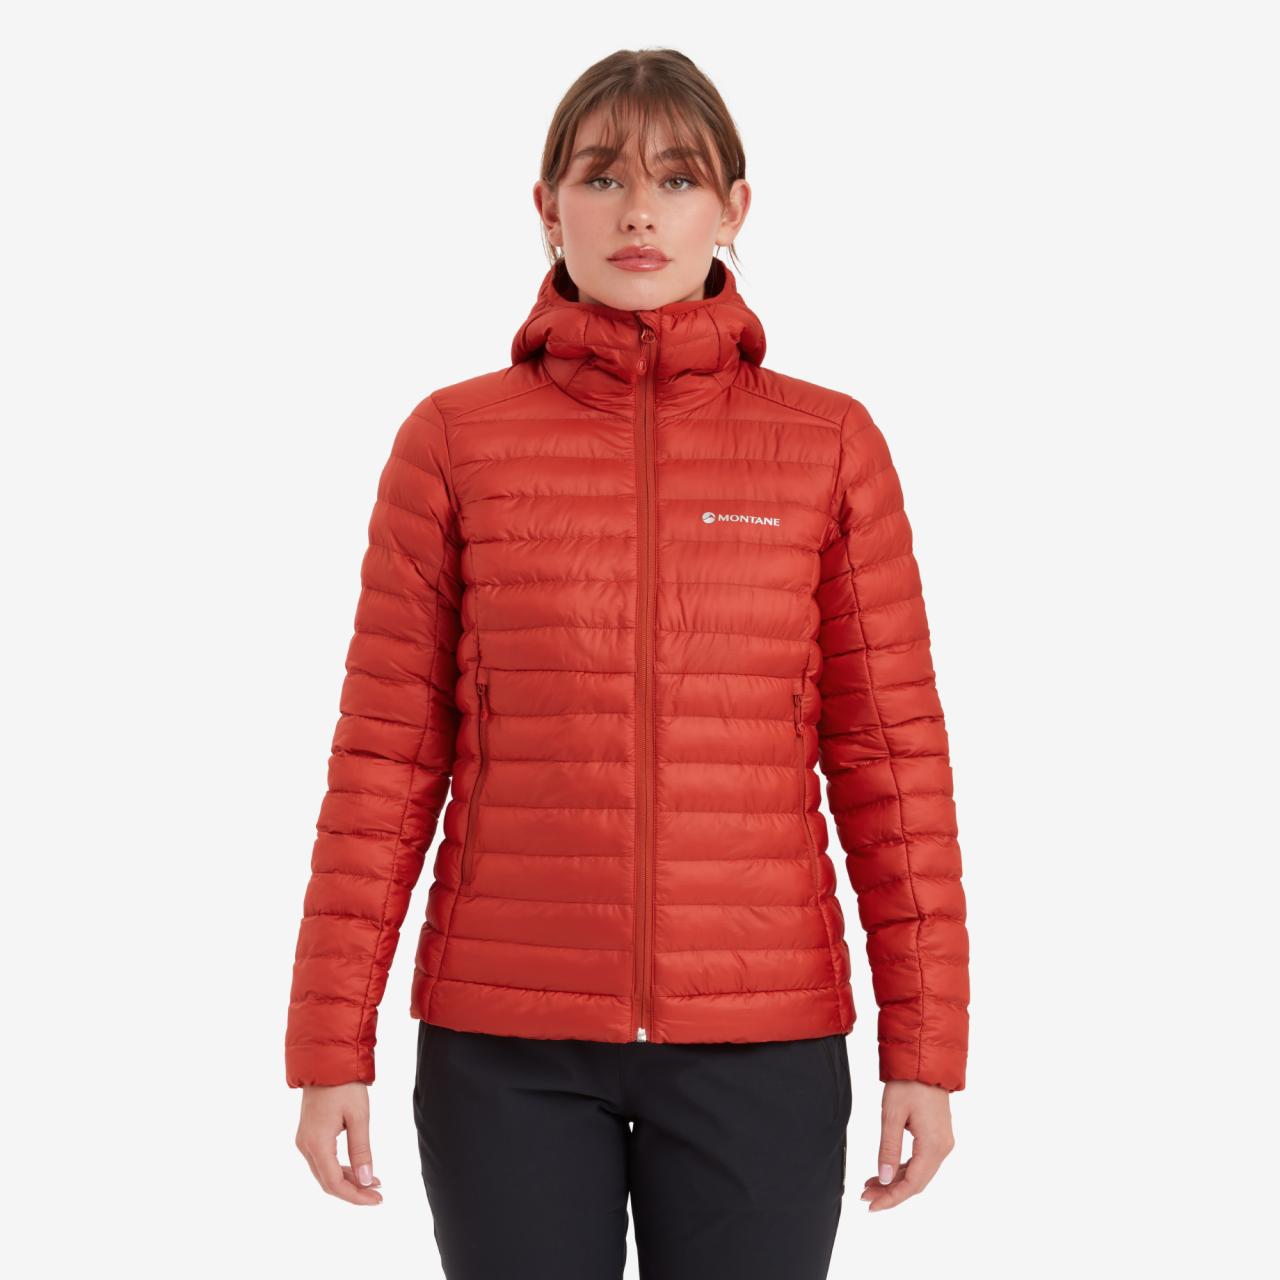 FEM ICARUS HOODIE-SAFFRON RED-UK16/XL dámská bunda červená